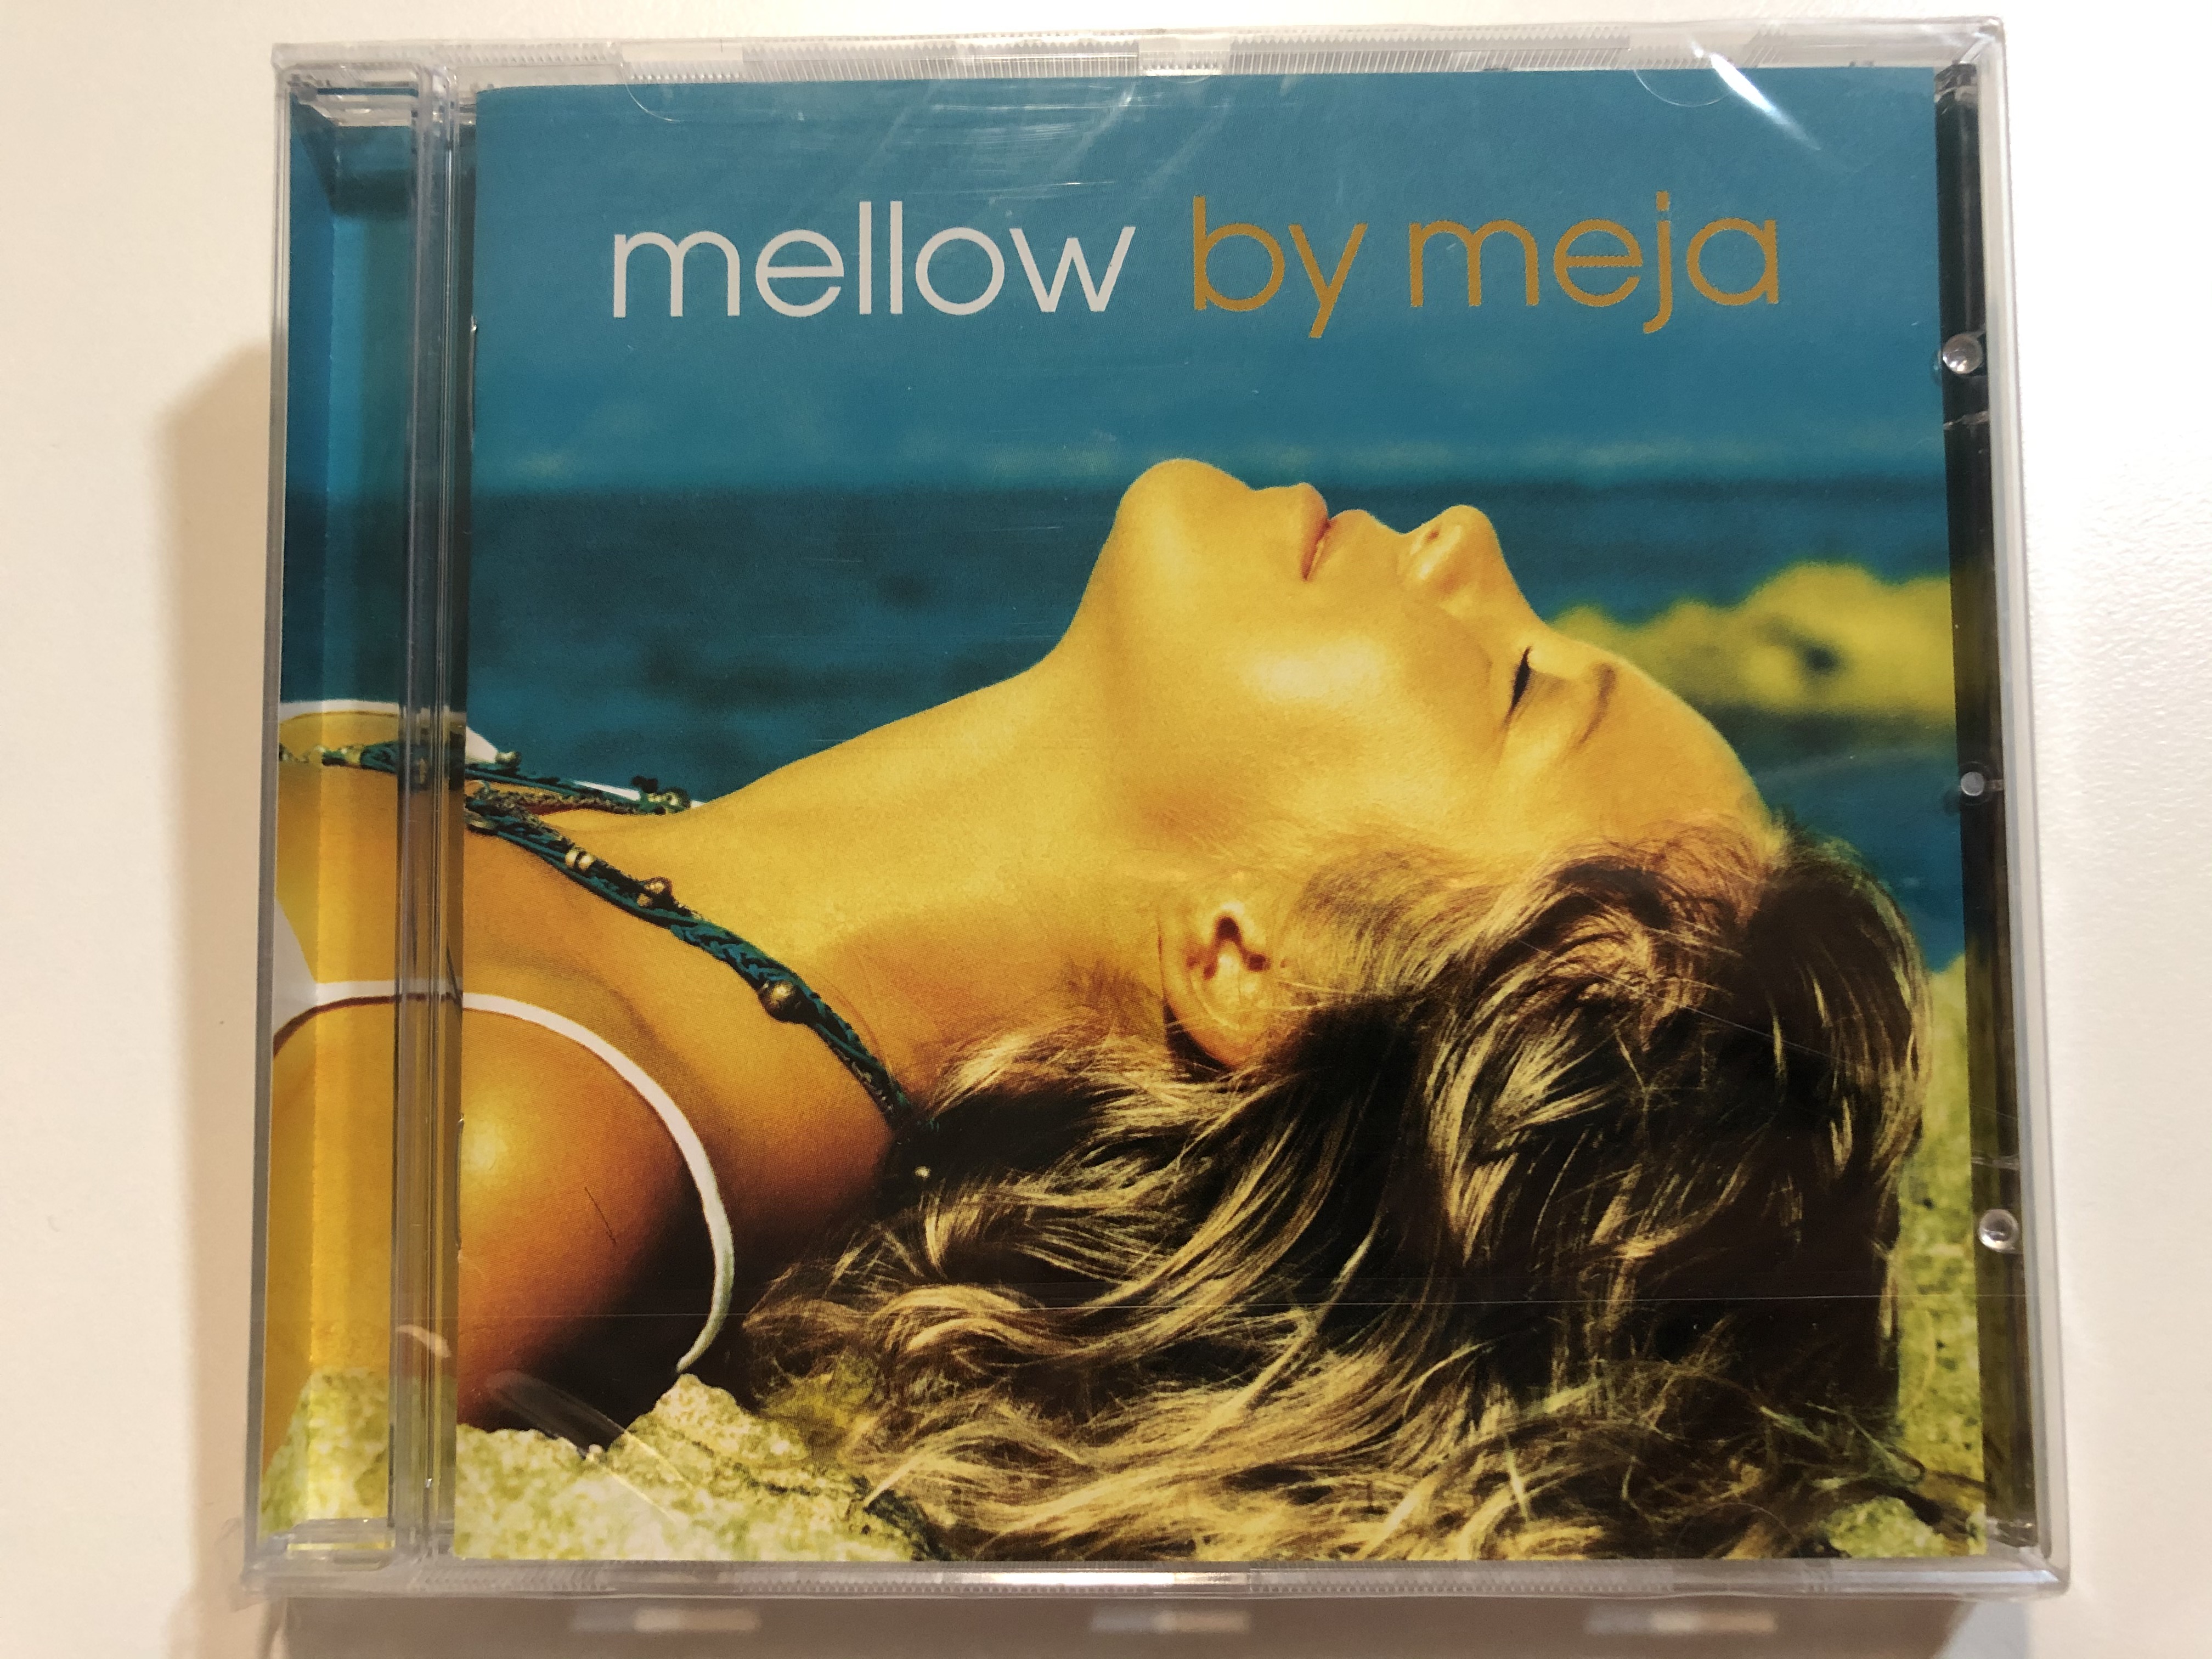 mellow-by-meja-sony-music-japan-audio-cd-2004-epc-515465-2-1-.jpg